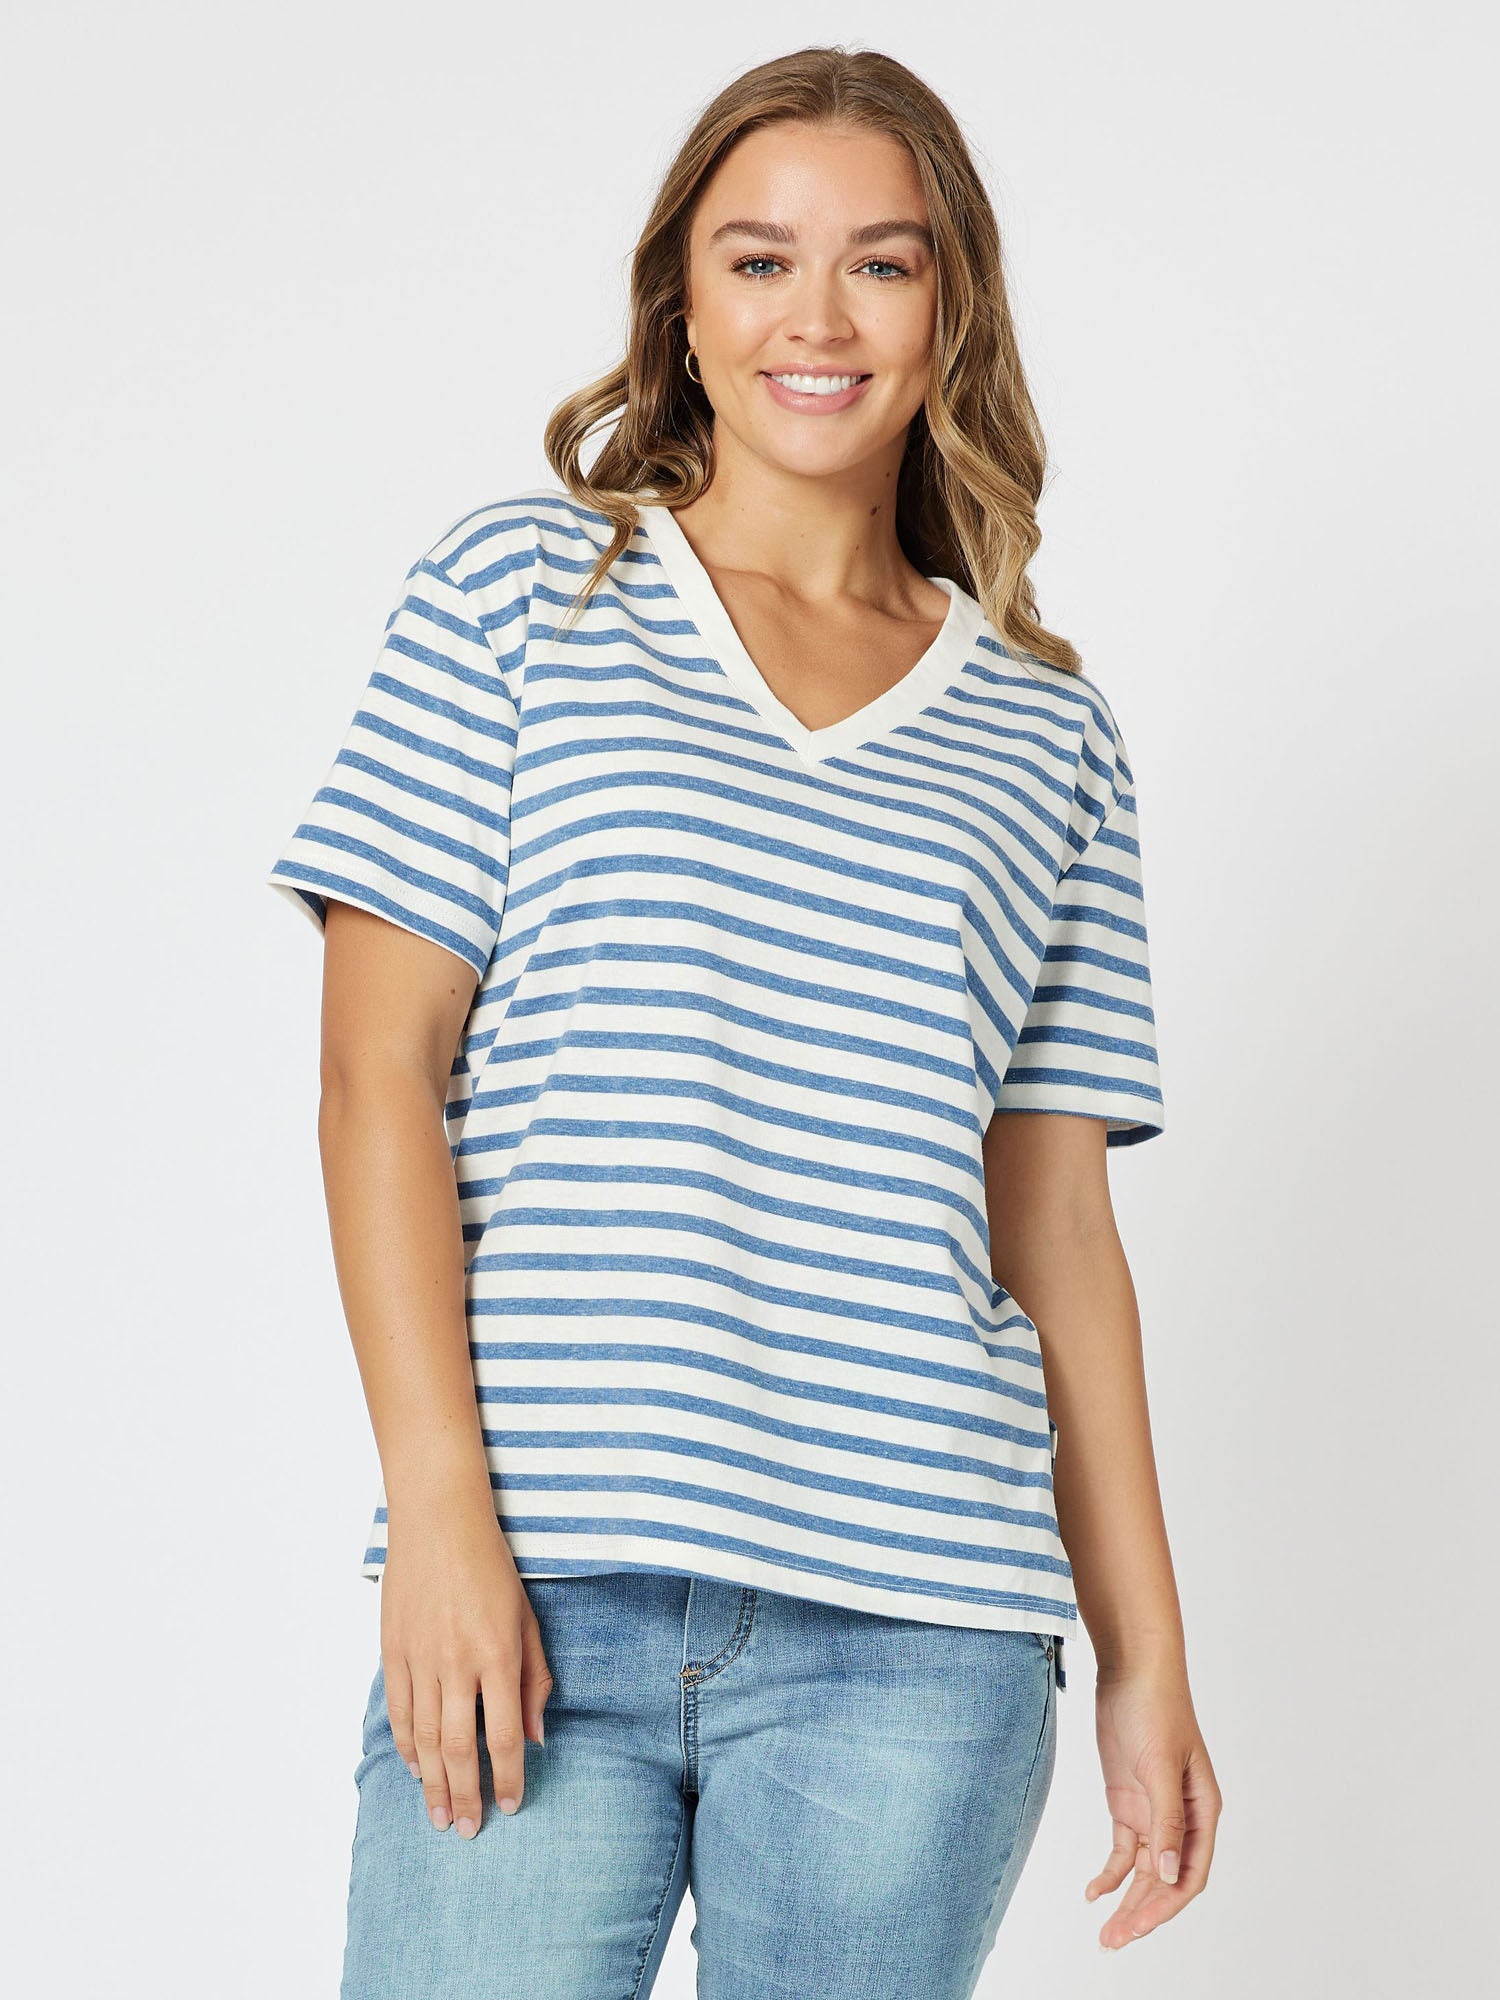 Sailor Stripe Knit Top Vneck Short Sleeve Tshirt - Blue/White